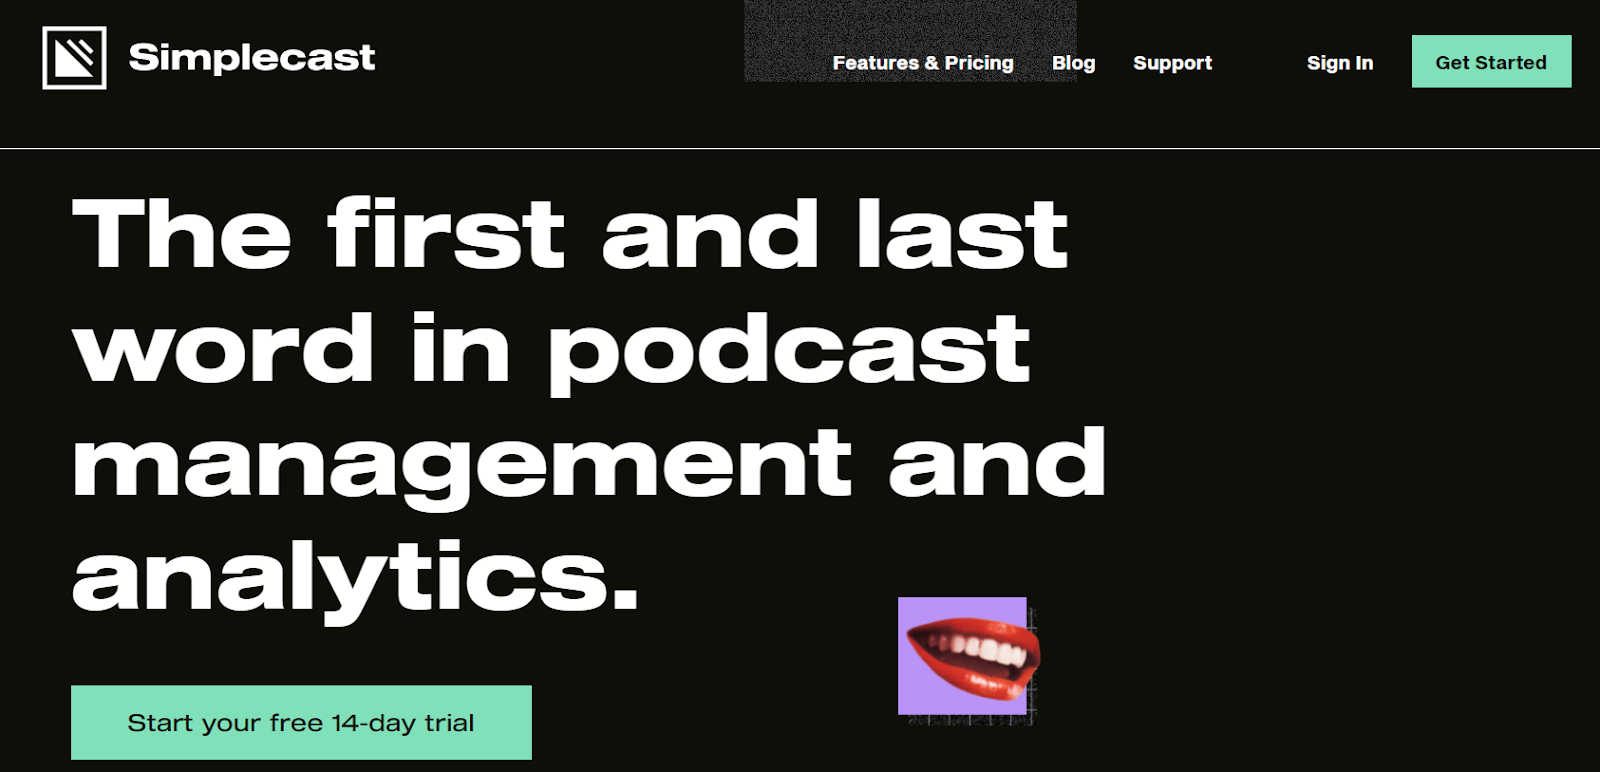 Simplecast podcast hosting platform has management and analytics tools.